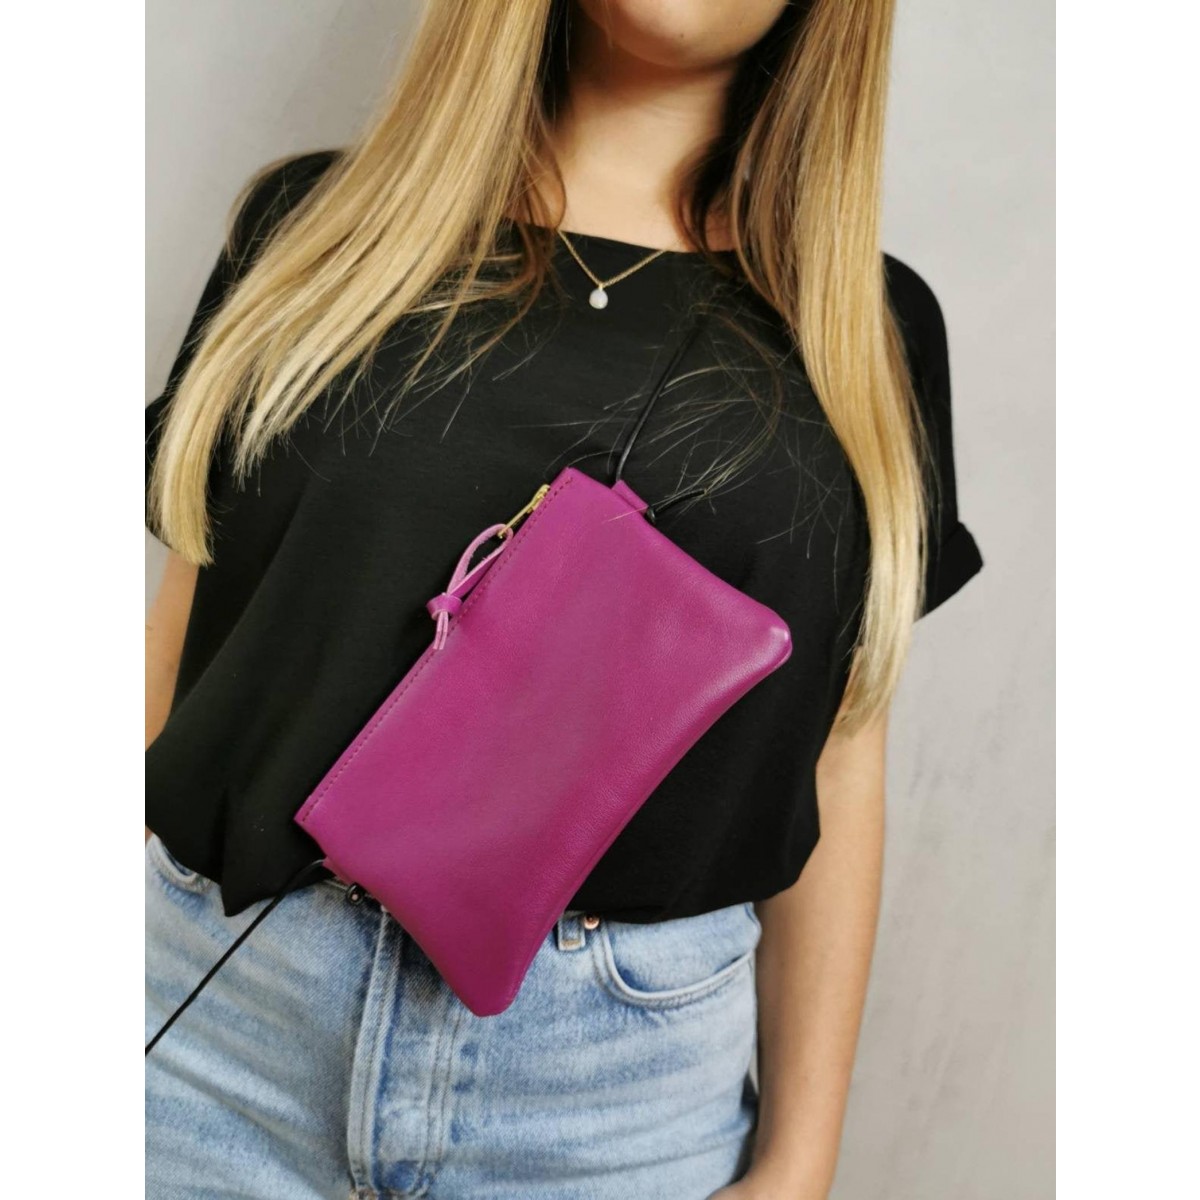 Minitasche echt Leder Fuchsia // Smartphonetasche // Handtasche // Tasche zum Reisen // Ledertasche Pink // Minibag